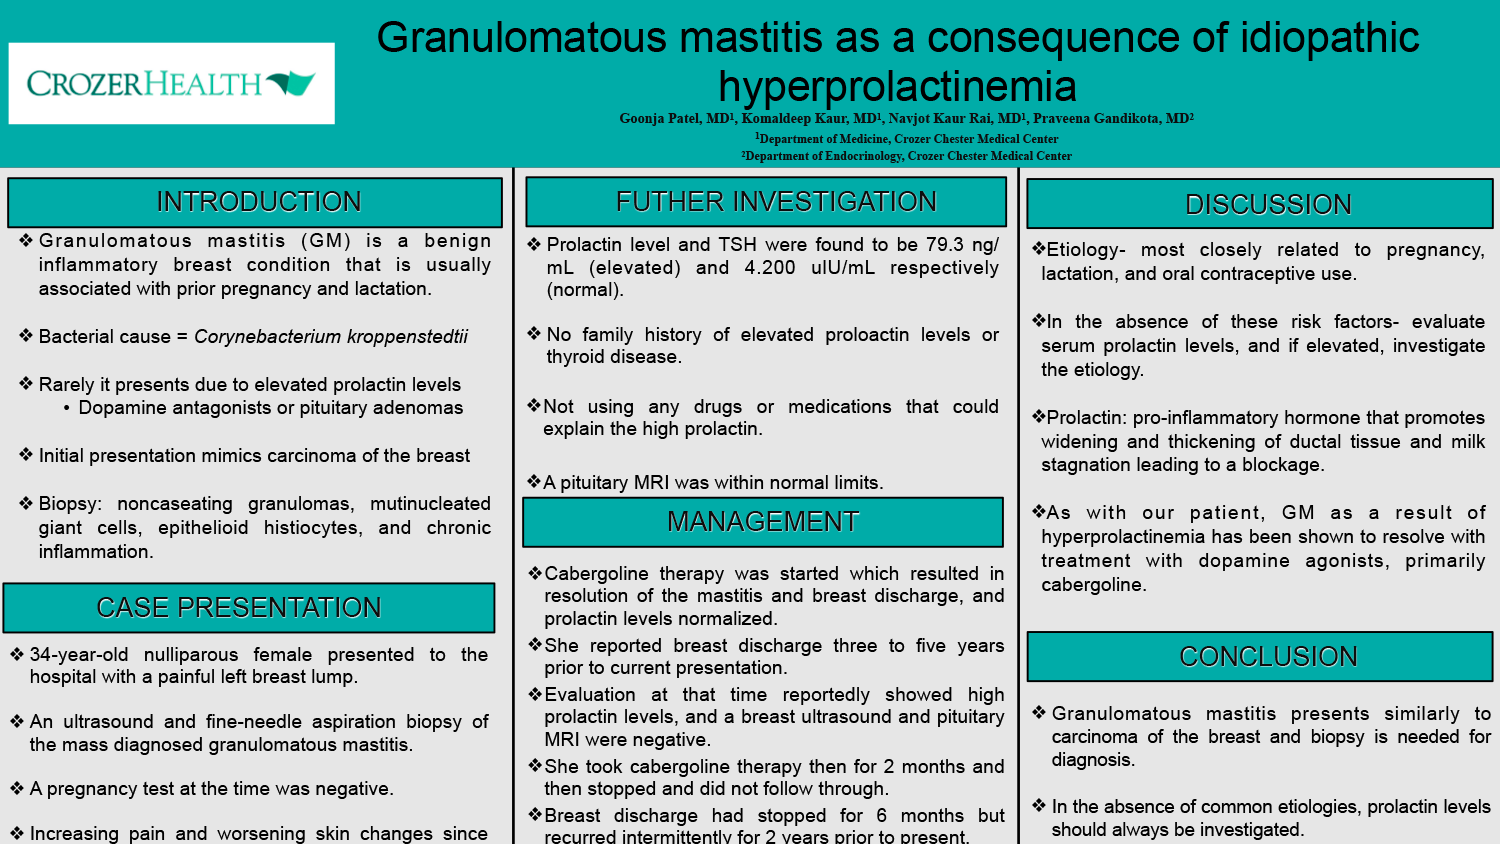 Goonja Patel - PAS-44-granulomatous-mastitis-as-a-consequence-of-idiopathic-hyperprolactinemia